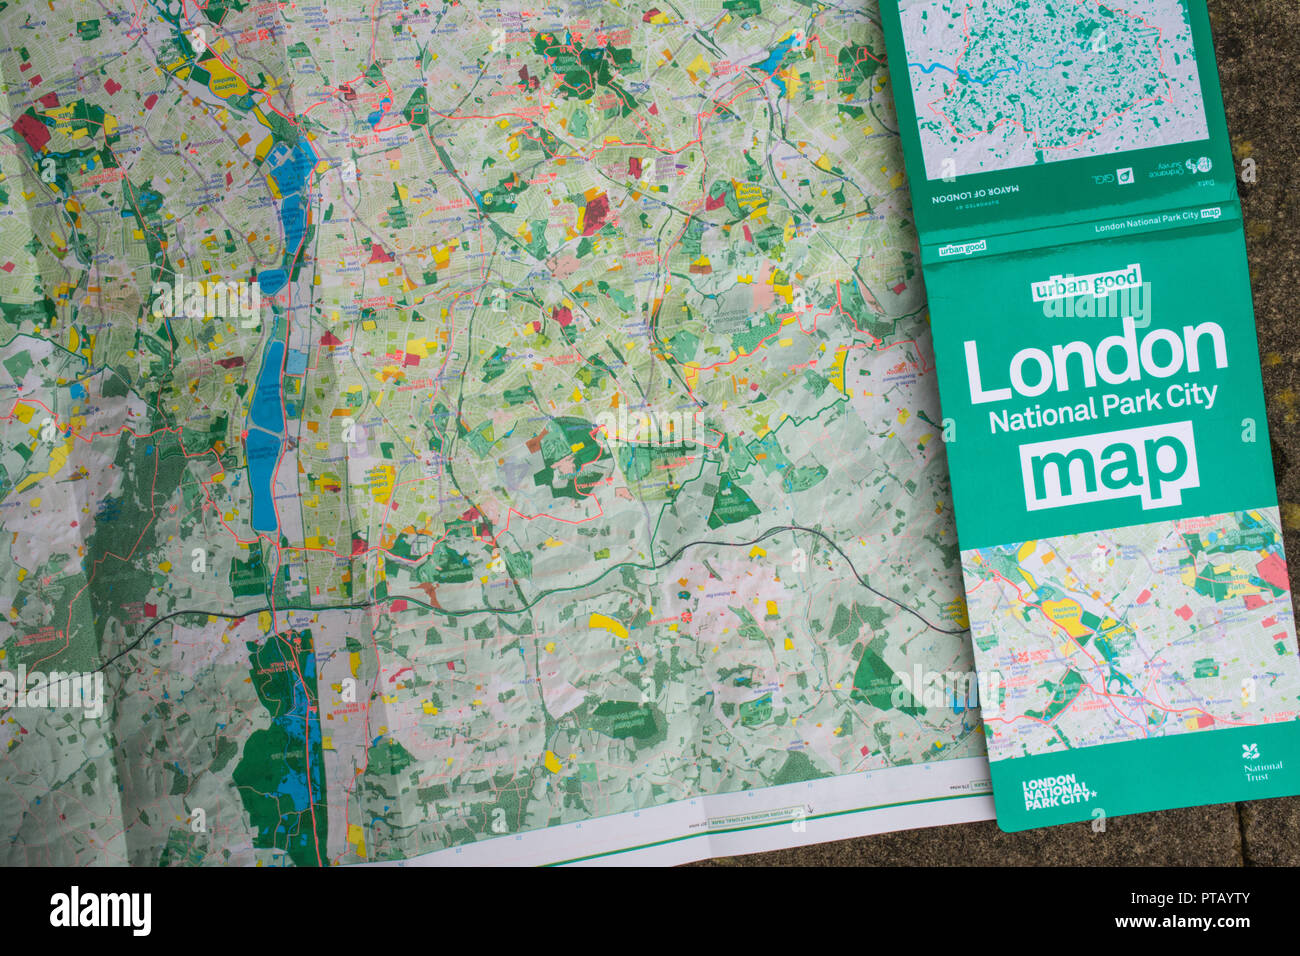 Urban Good London National Park City map prodotta nel 2018 dalla National Trust Foto Stock